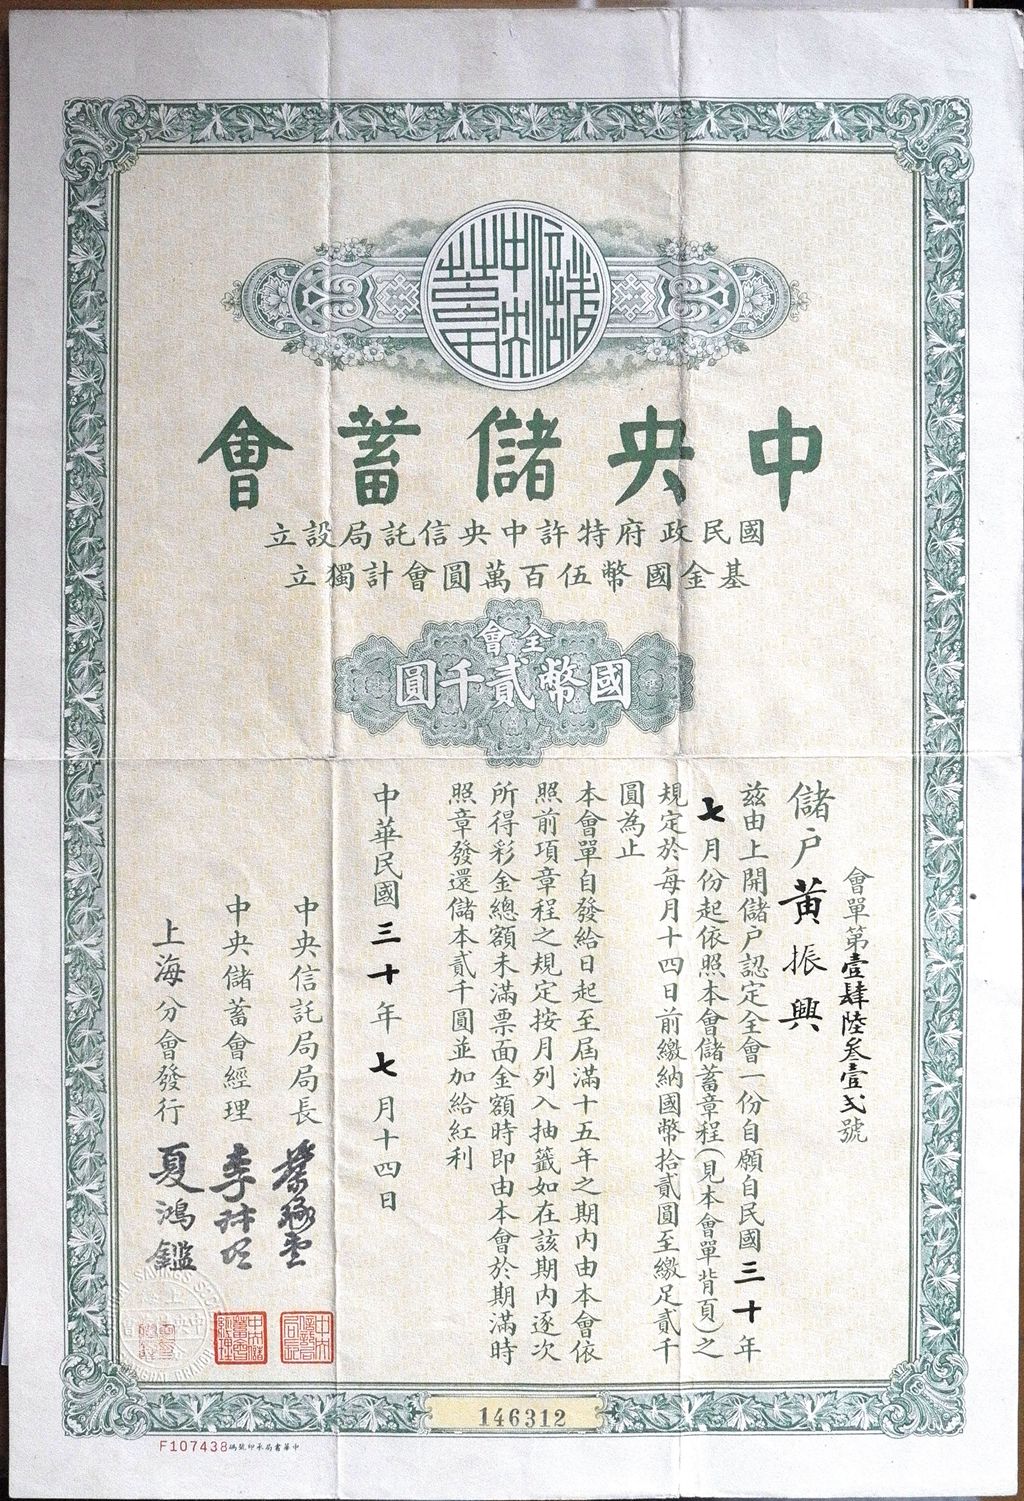 B2734, China Central Savings Society, 2000 Dollars (1 Lot) Lottery Bond Loan, 1941